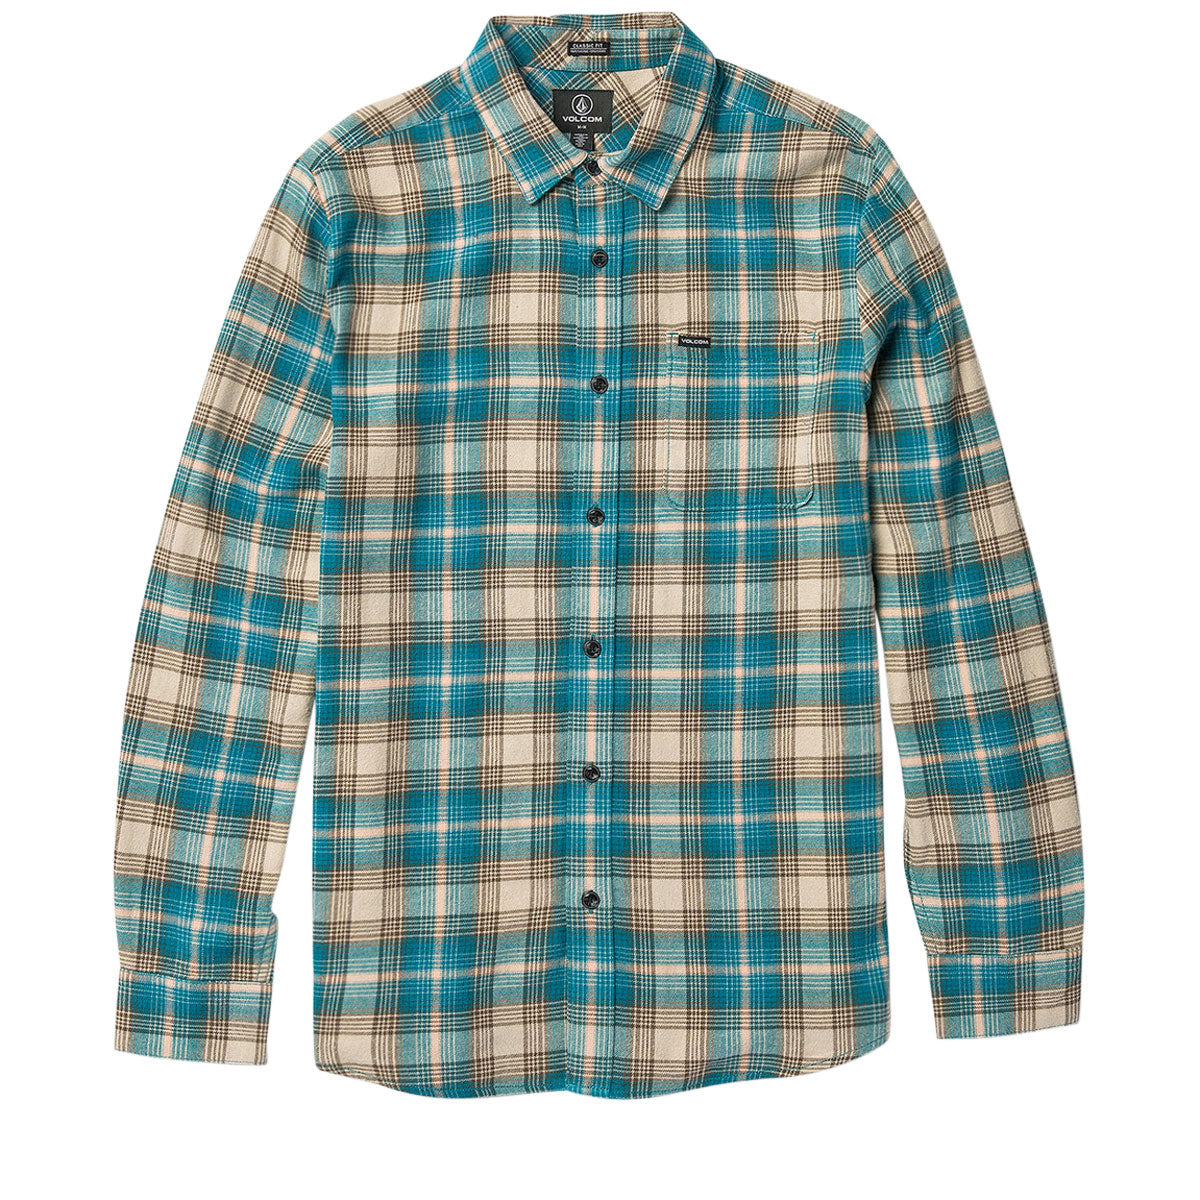 Volcom Caden Plaid Long Sleeve Shirt - Light Khaki image 1